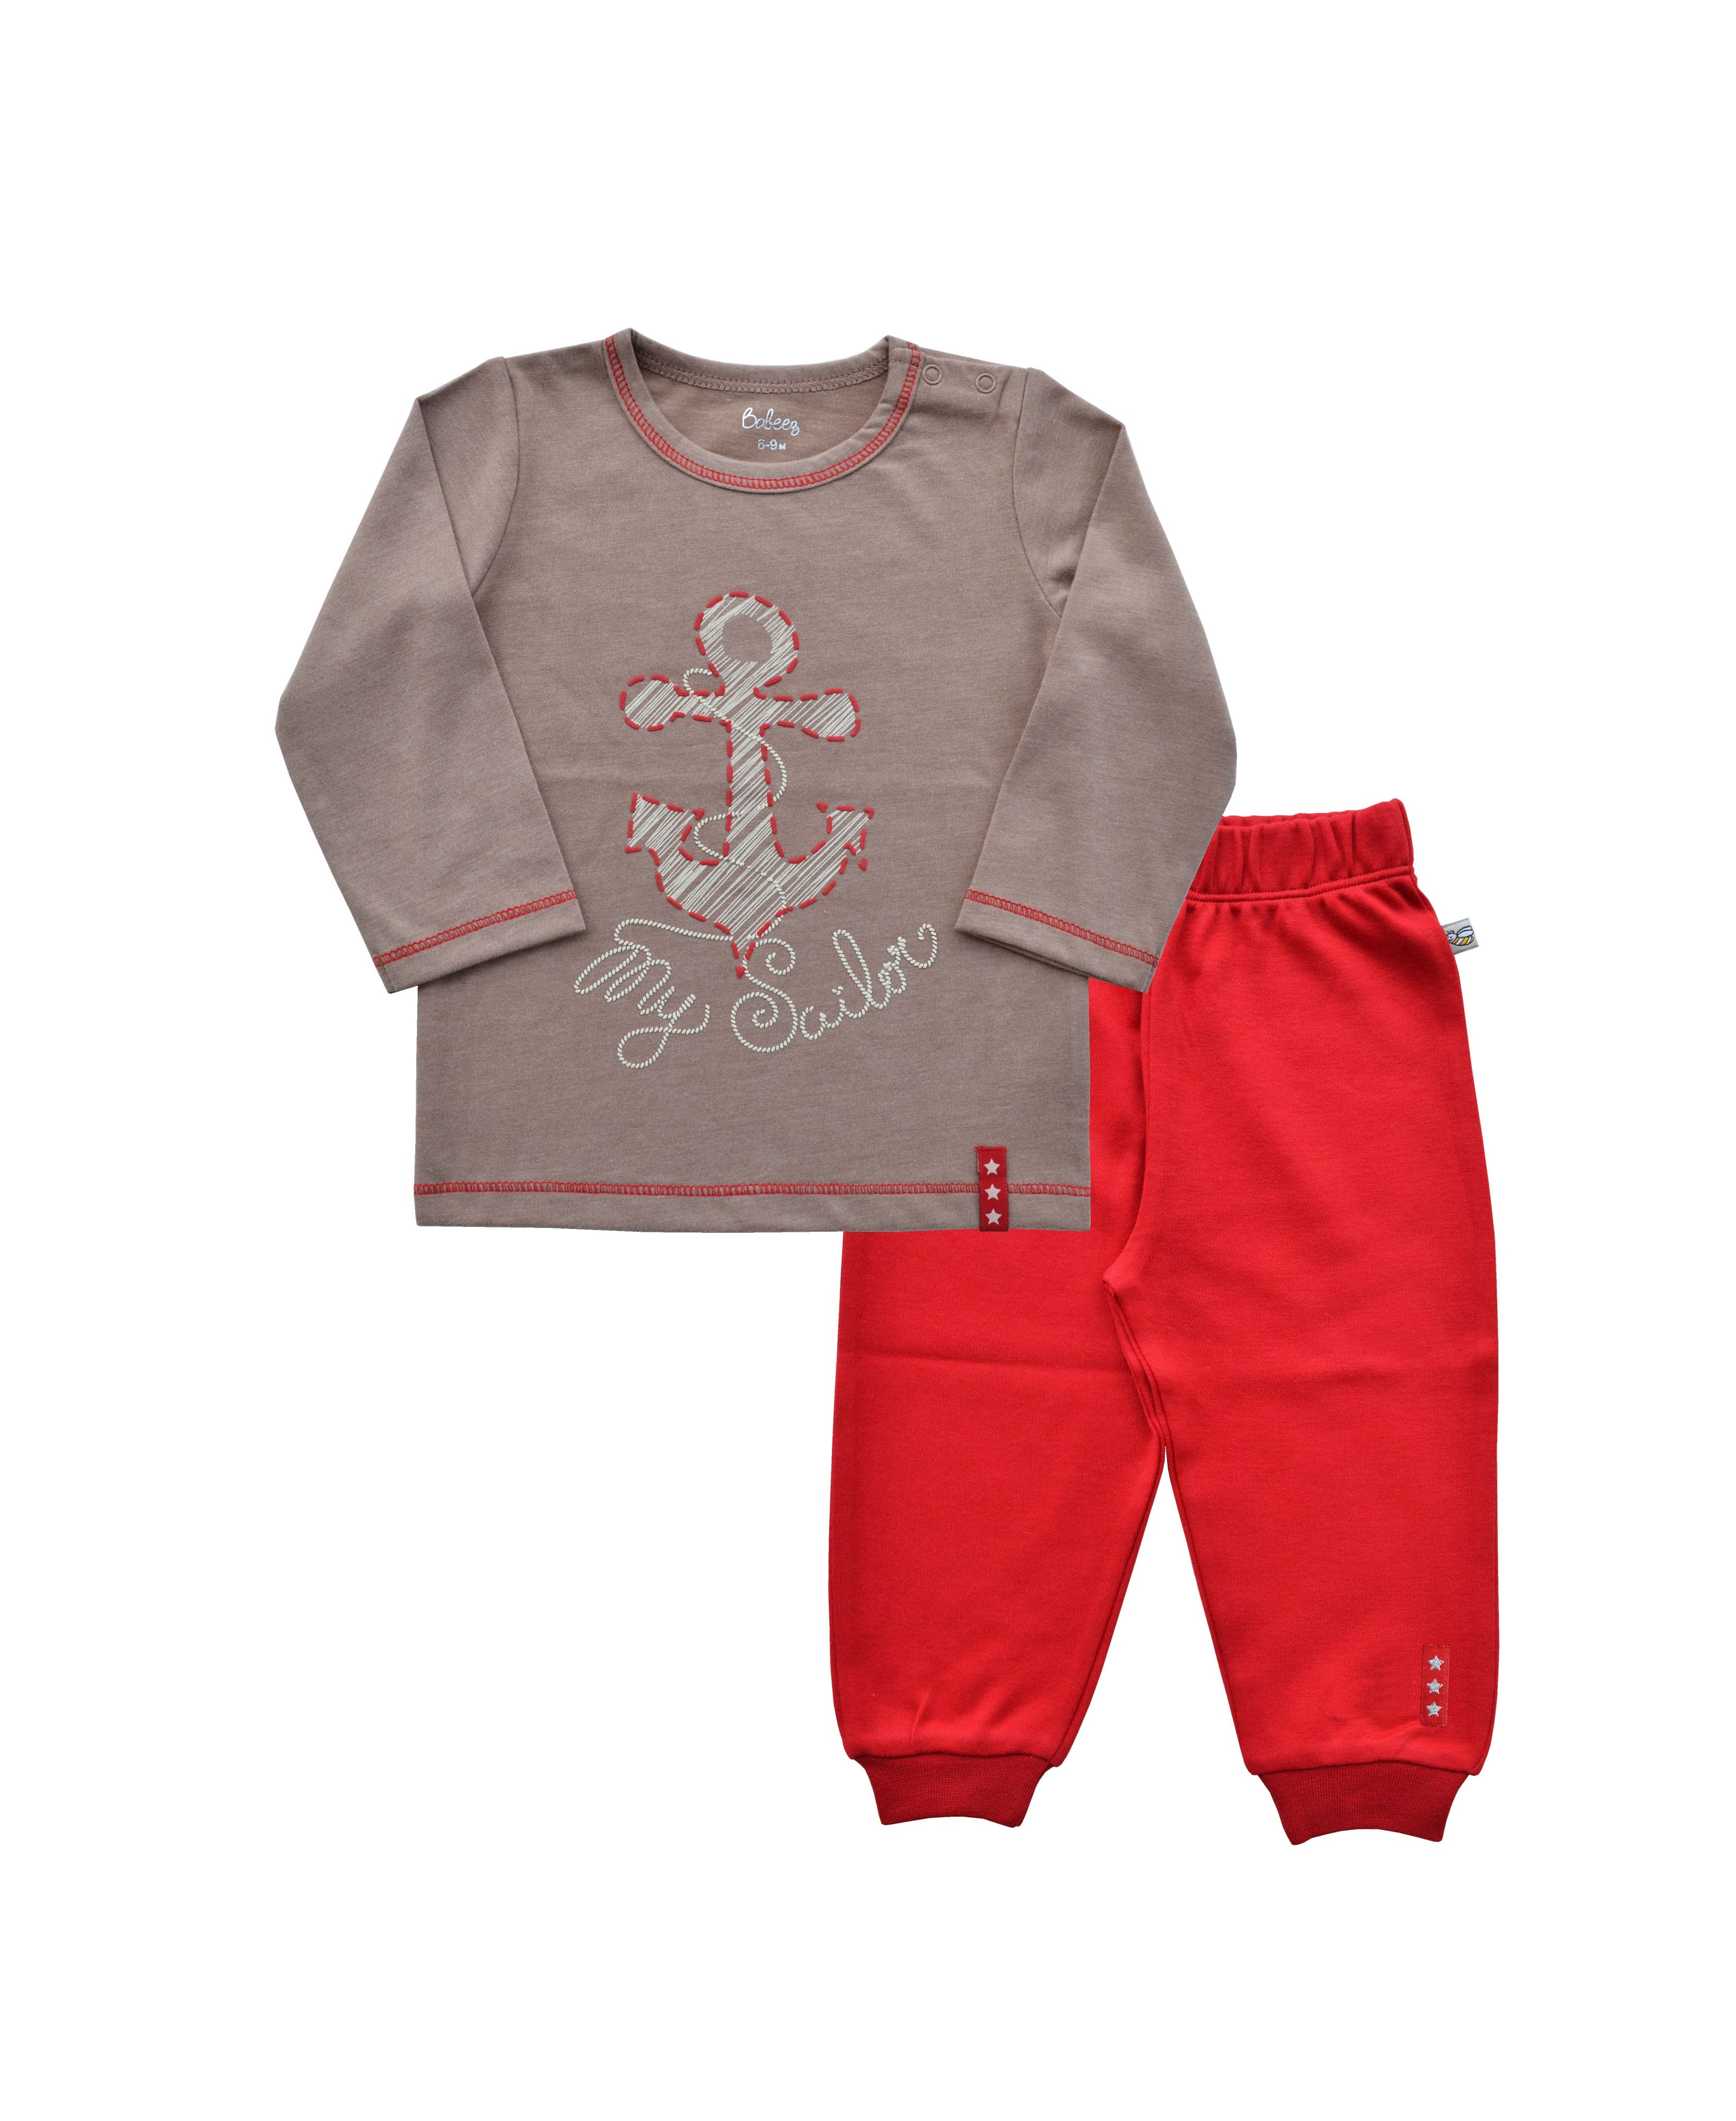 My Sailor Print Brown T-shirt + Red Pant ( 100% Cotton Interlock Biowash)